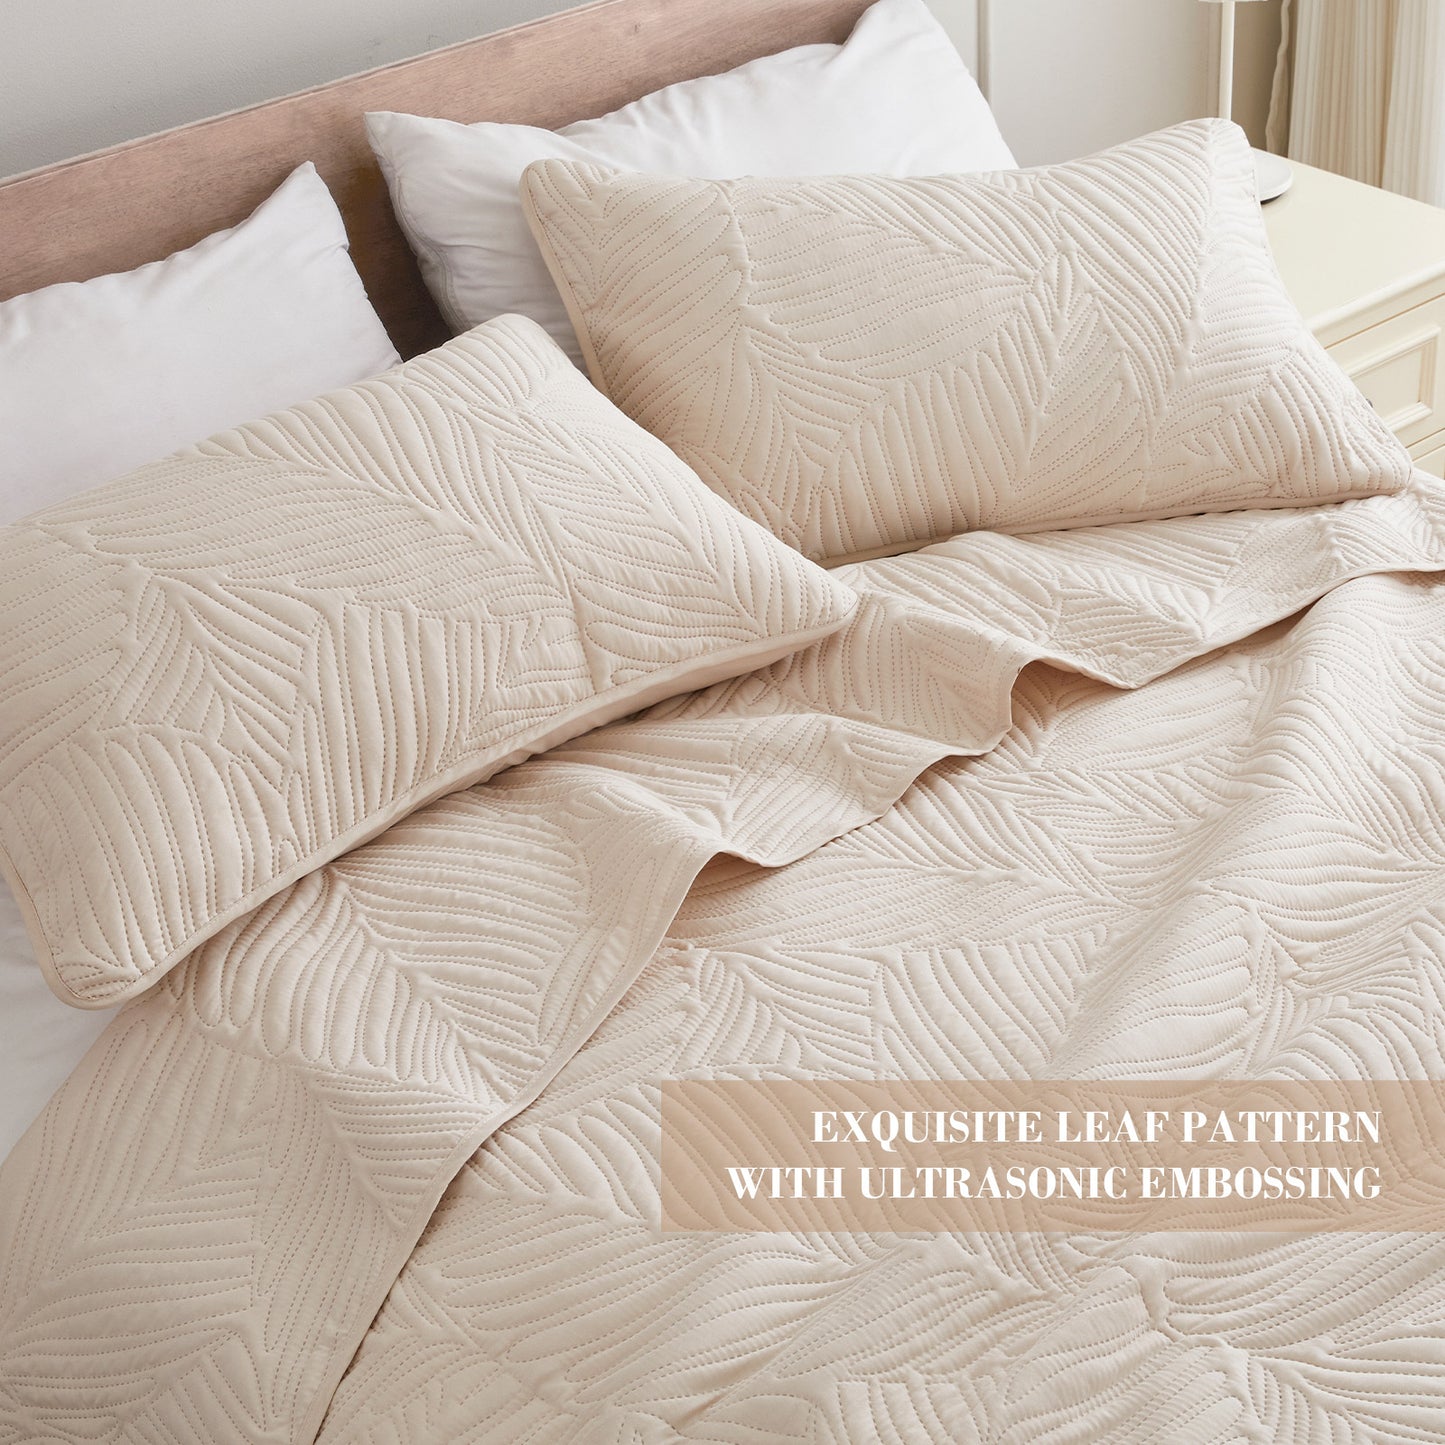 Exclusivo Mezcla California King Quilt Set Brich Beige, Lightweight Bedspread Leaf Pattern Bed Cover Soft Coverlet Bedding Set(1 Quilt, 2 Pillow Shams)